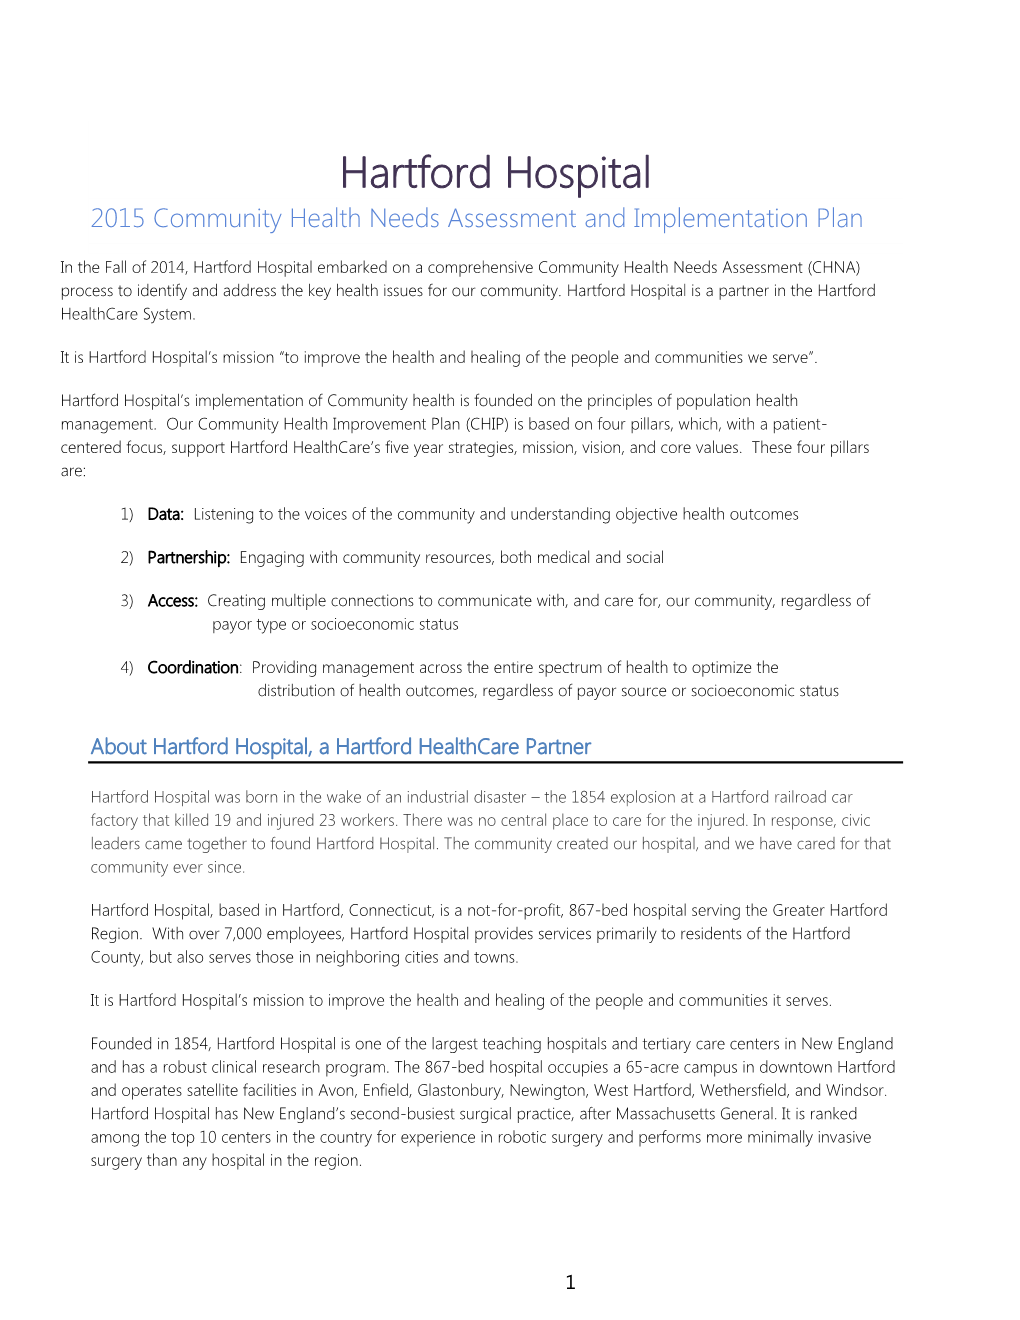 Hartford Hospital 2015 Community Health Needs Assessment and Implementation Plan